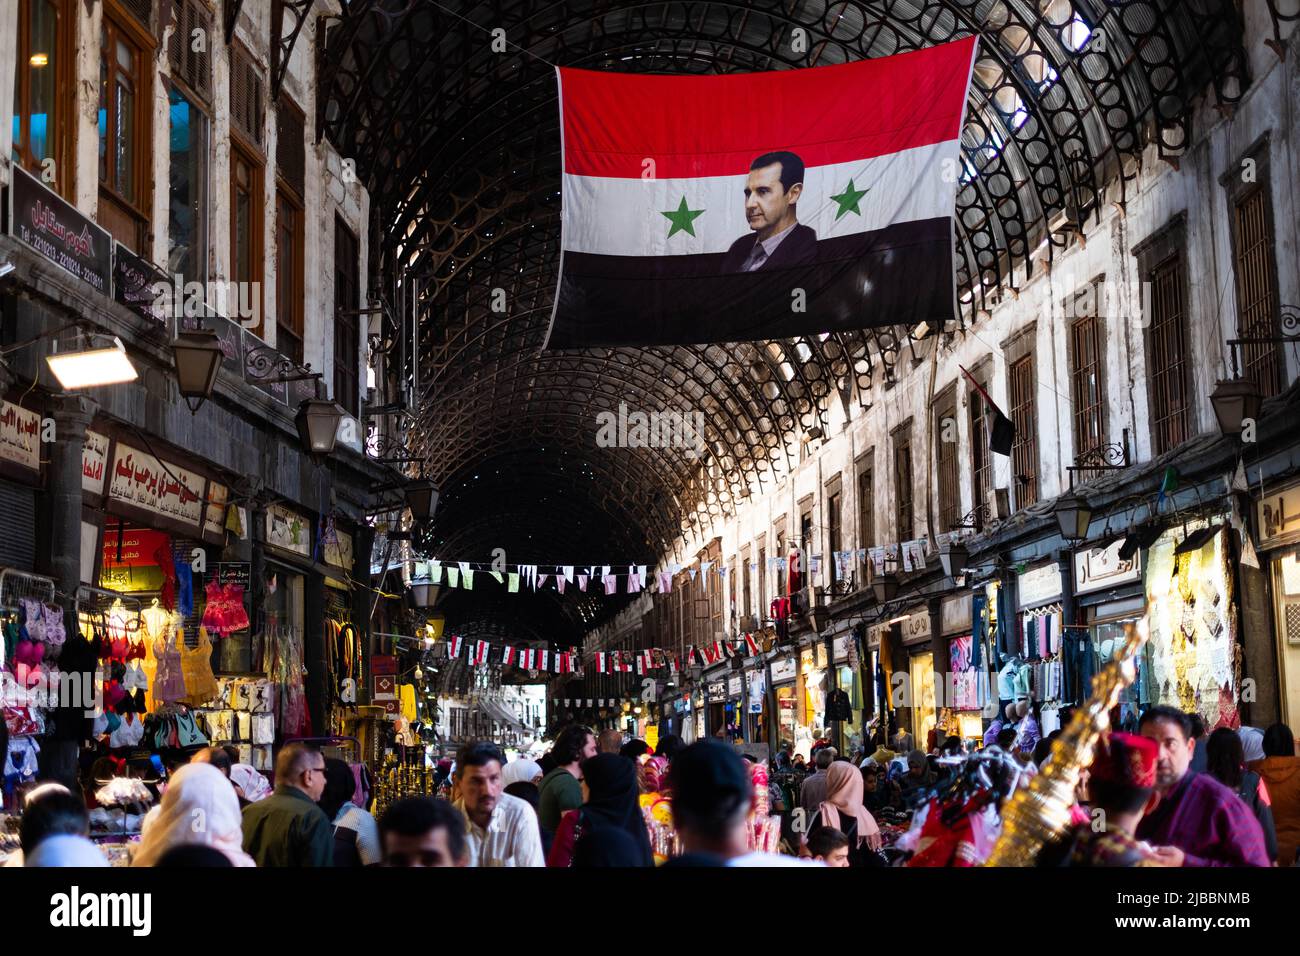 Damascus, Syria -May, 2022: Portrait image of Bashar al-Assad, President of Syria on syrian flag at Suq in Damascus Stock Photo